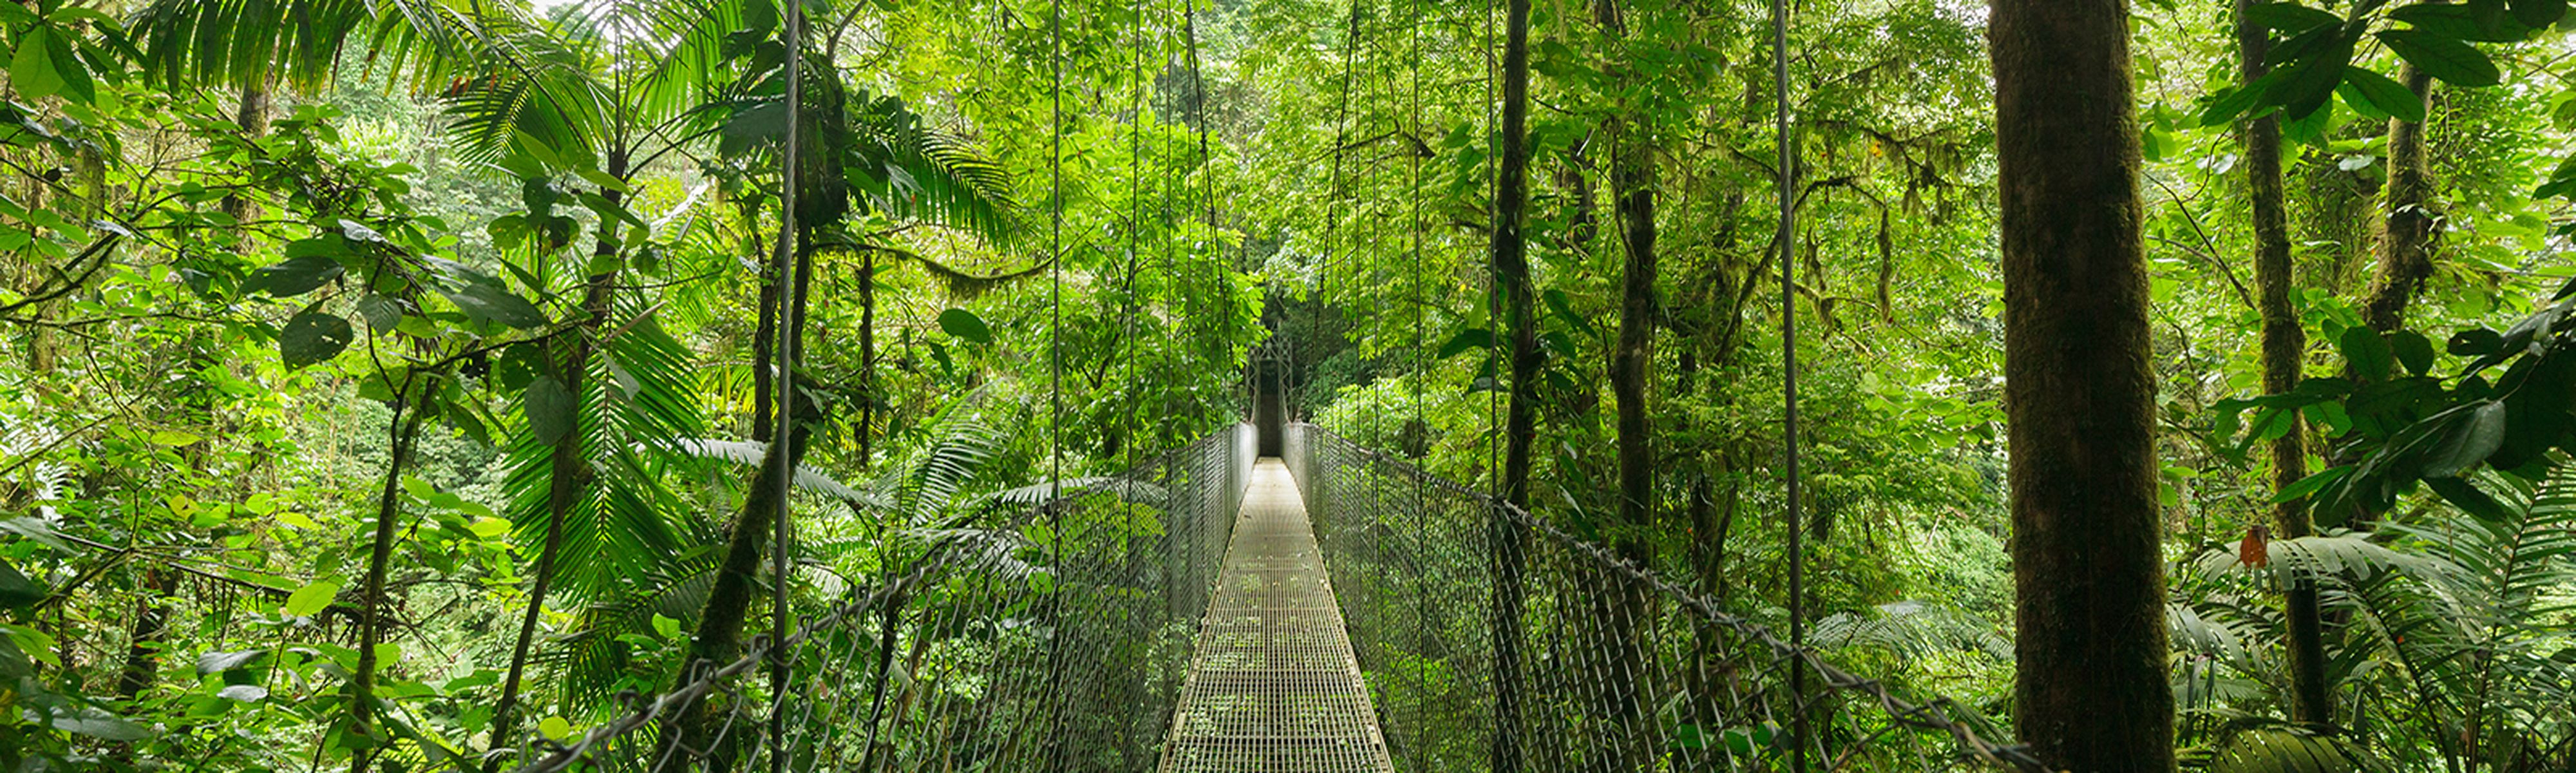 metal bridge crossing through santa elena cloud rainforest in costa rica